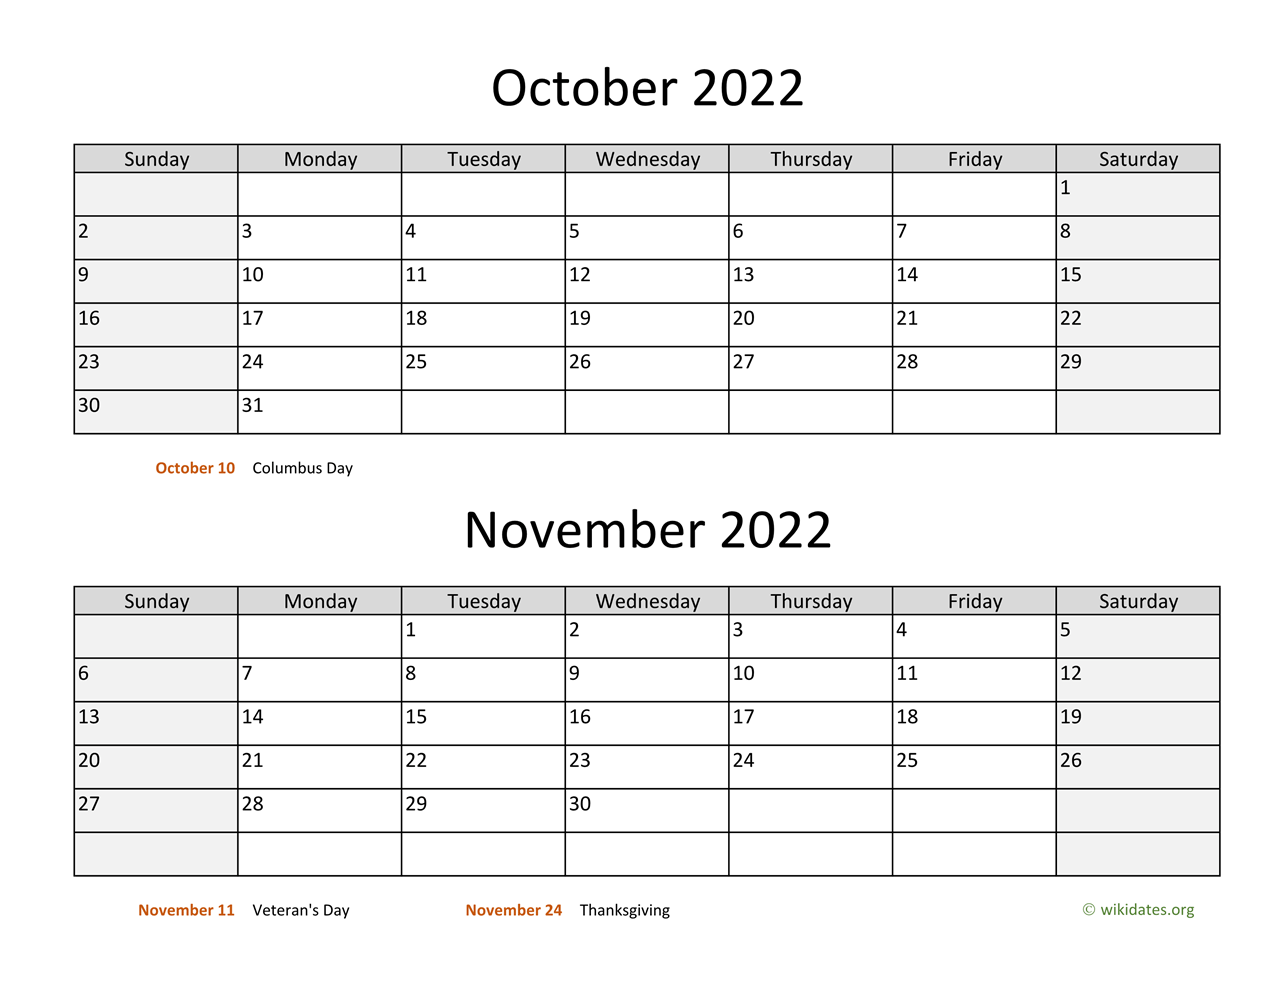 October November Calendar 2022 October And November 2022 Calendar | Wikidates.org